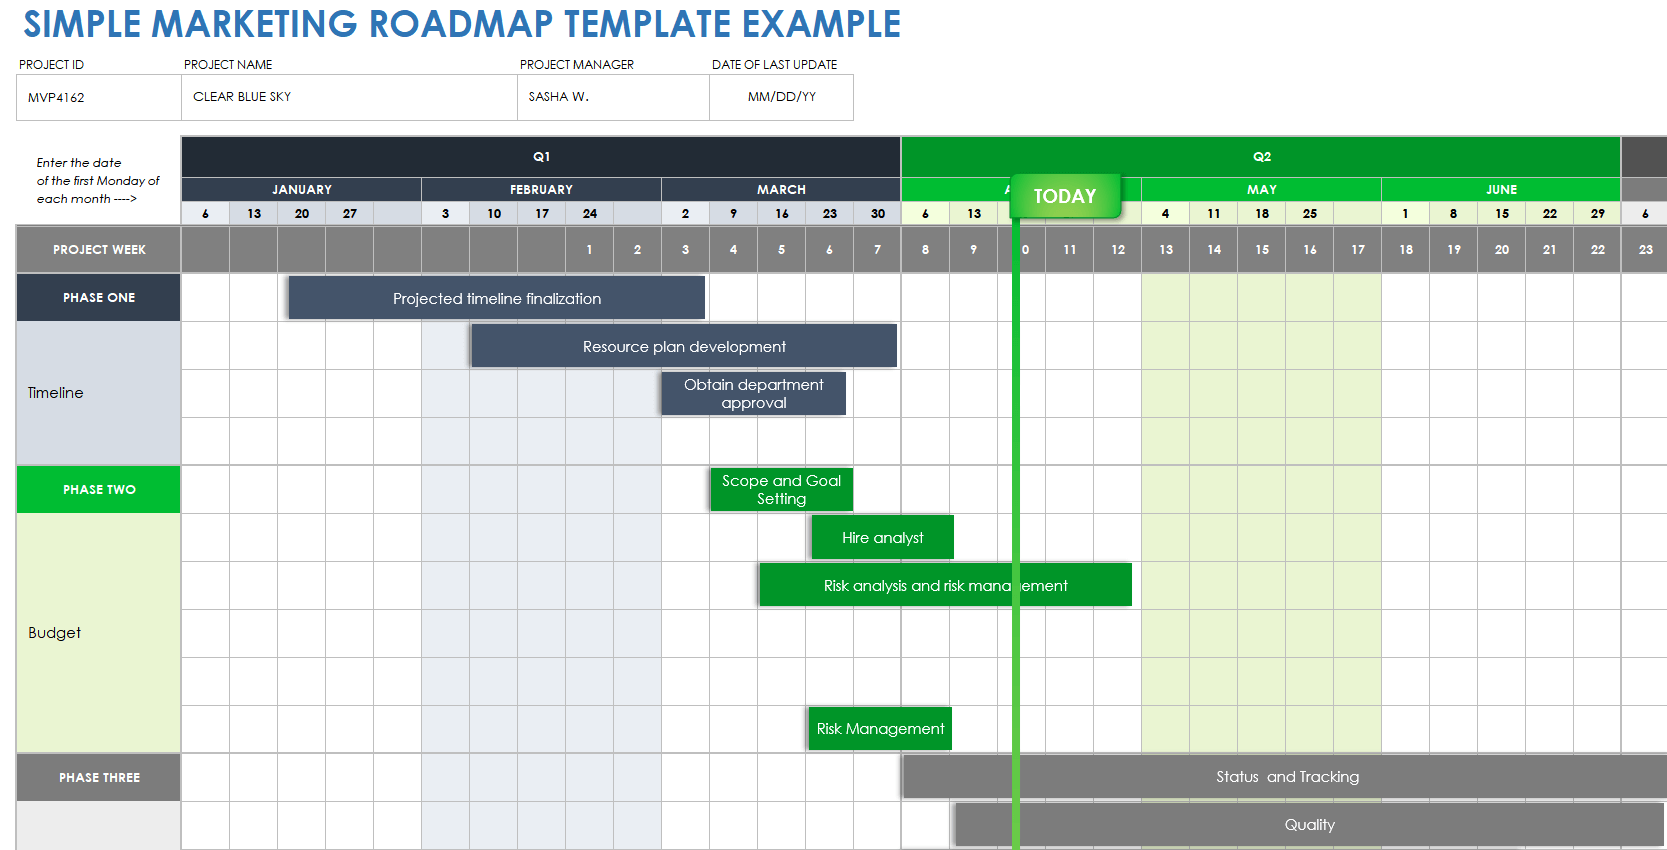 Simple Marketing Roadmap Template Exampe